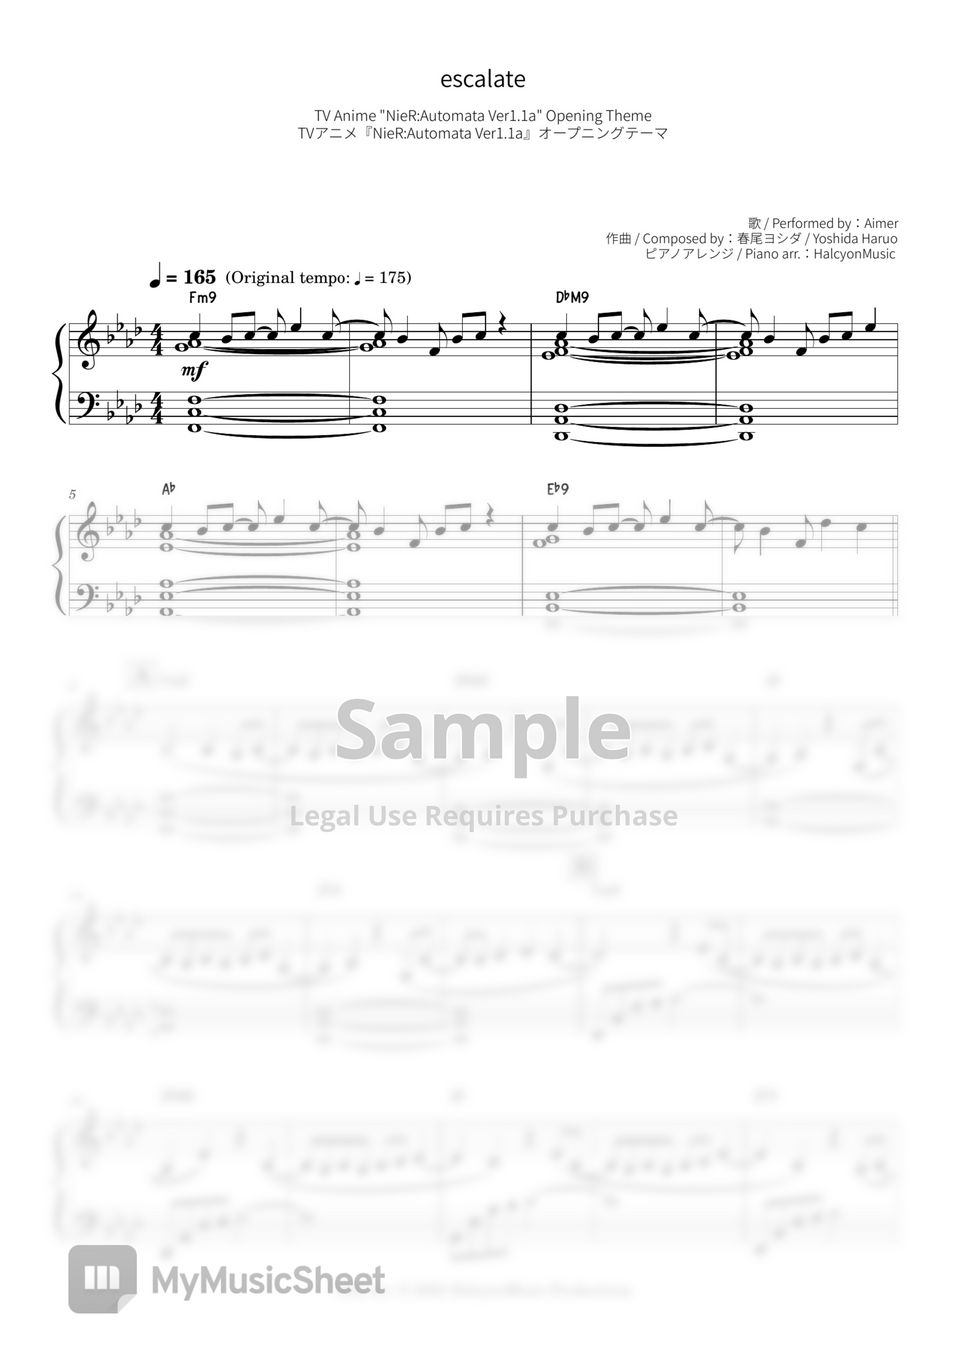 Aimer - escalate (NieR: Automata Ver1.1a OP) by HalcyonMusic